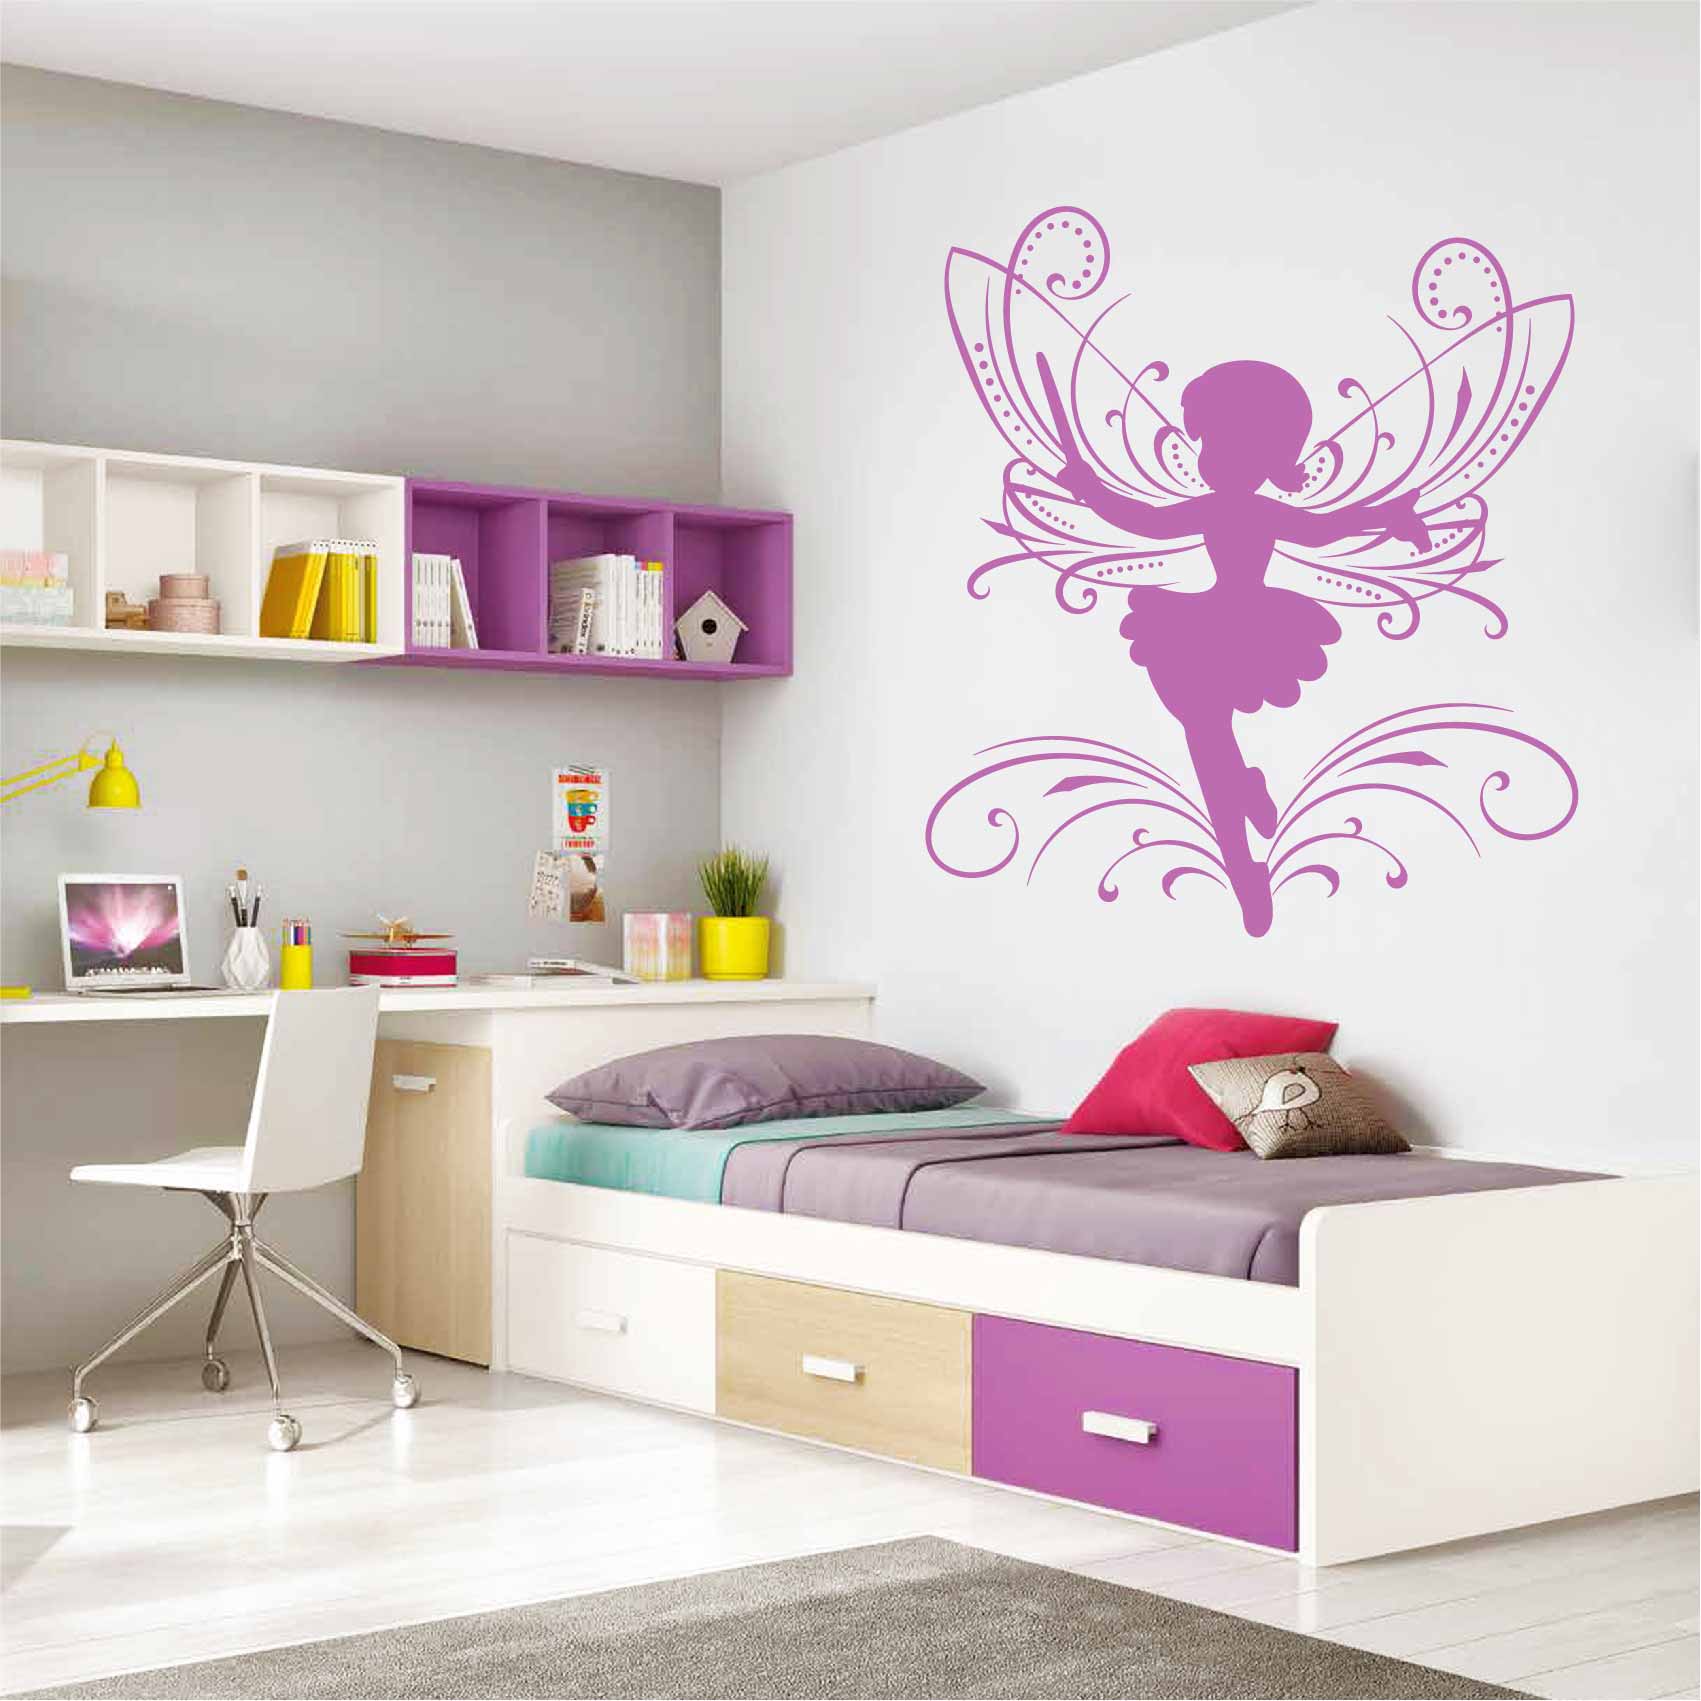 https://media.cdnws.com/_i/61411/841/2412/44/stickers-fee-magie-ref3fee-autocollant-muraux-fee-sticker-mural-chambre-fille-salon-deco-enfant.jpeg